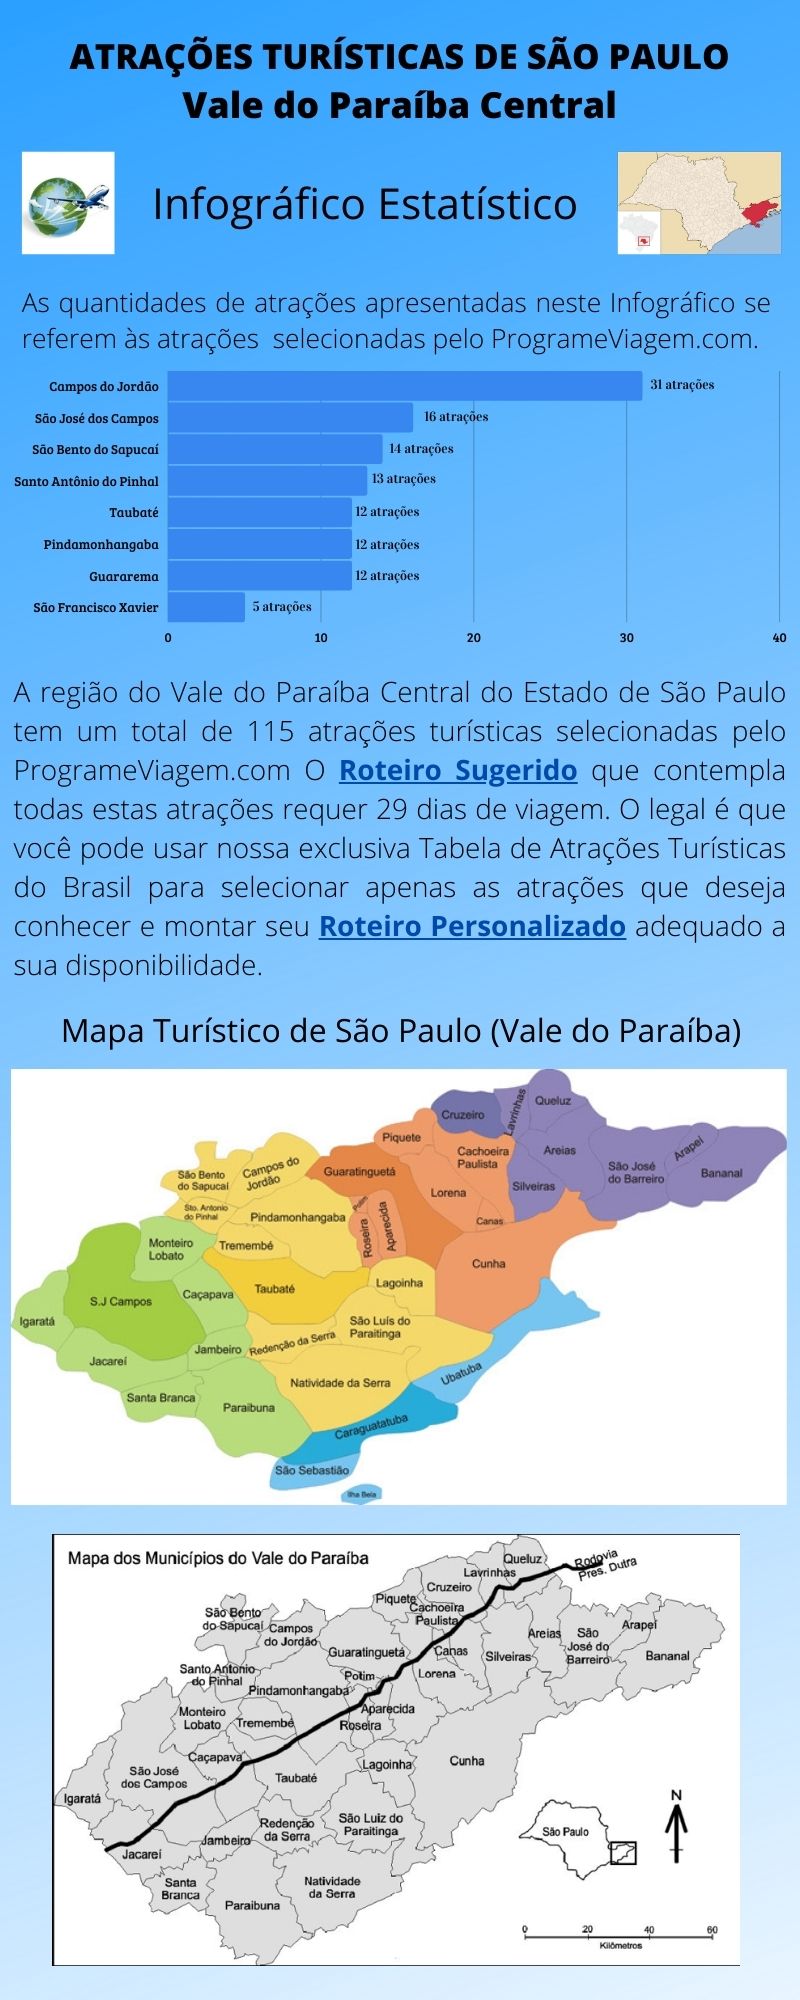 Infográfico Atrações Turísticas de São Paulo (Vale do Paraíba Central)